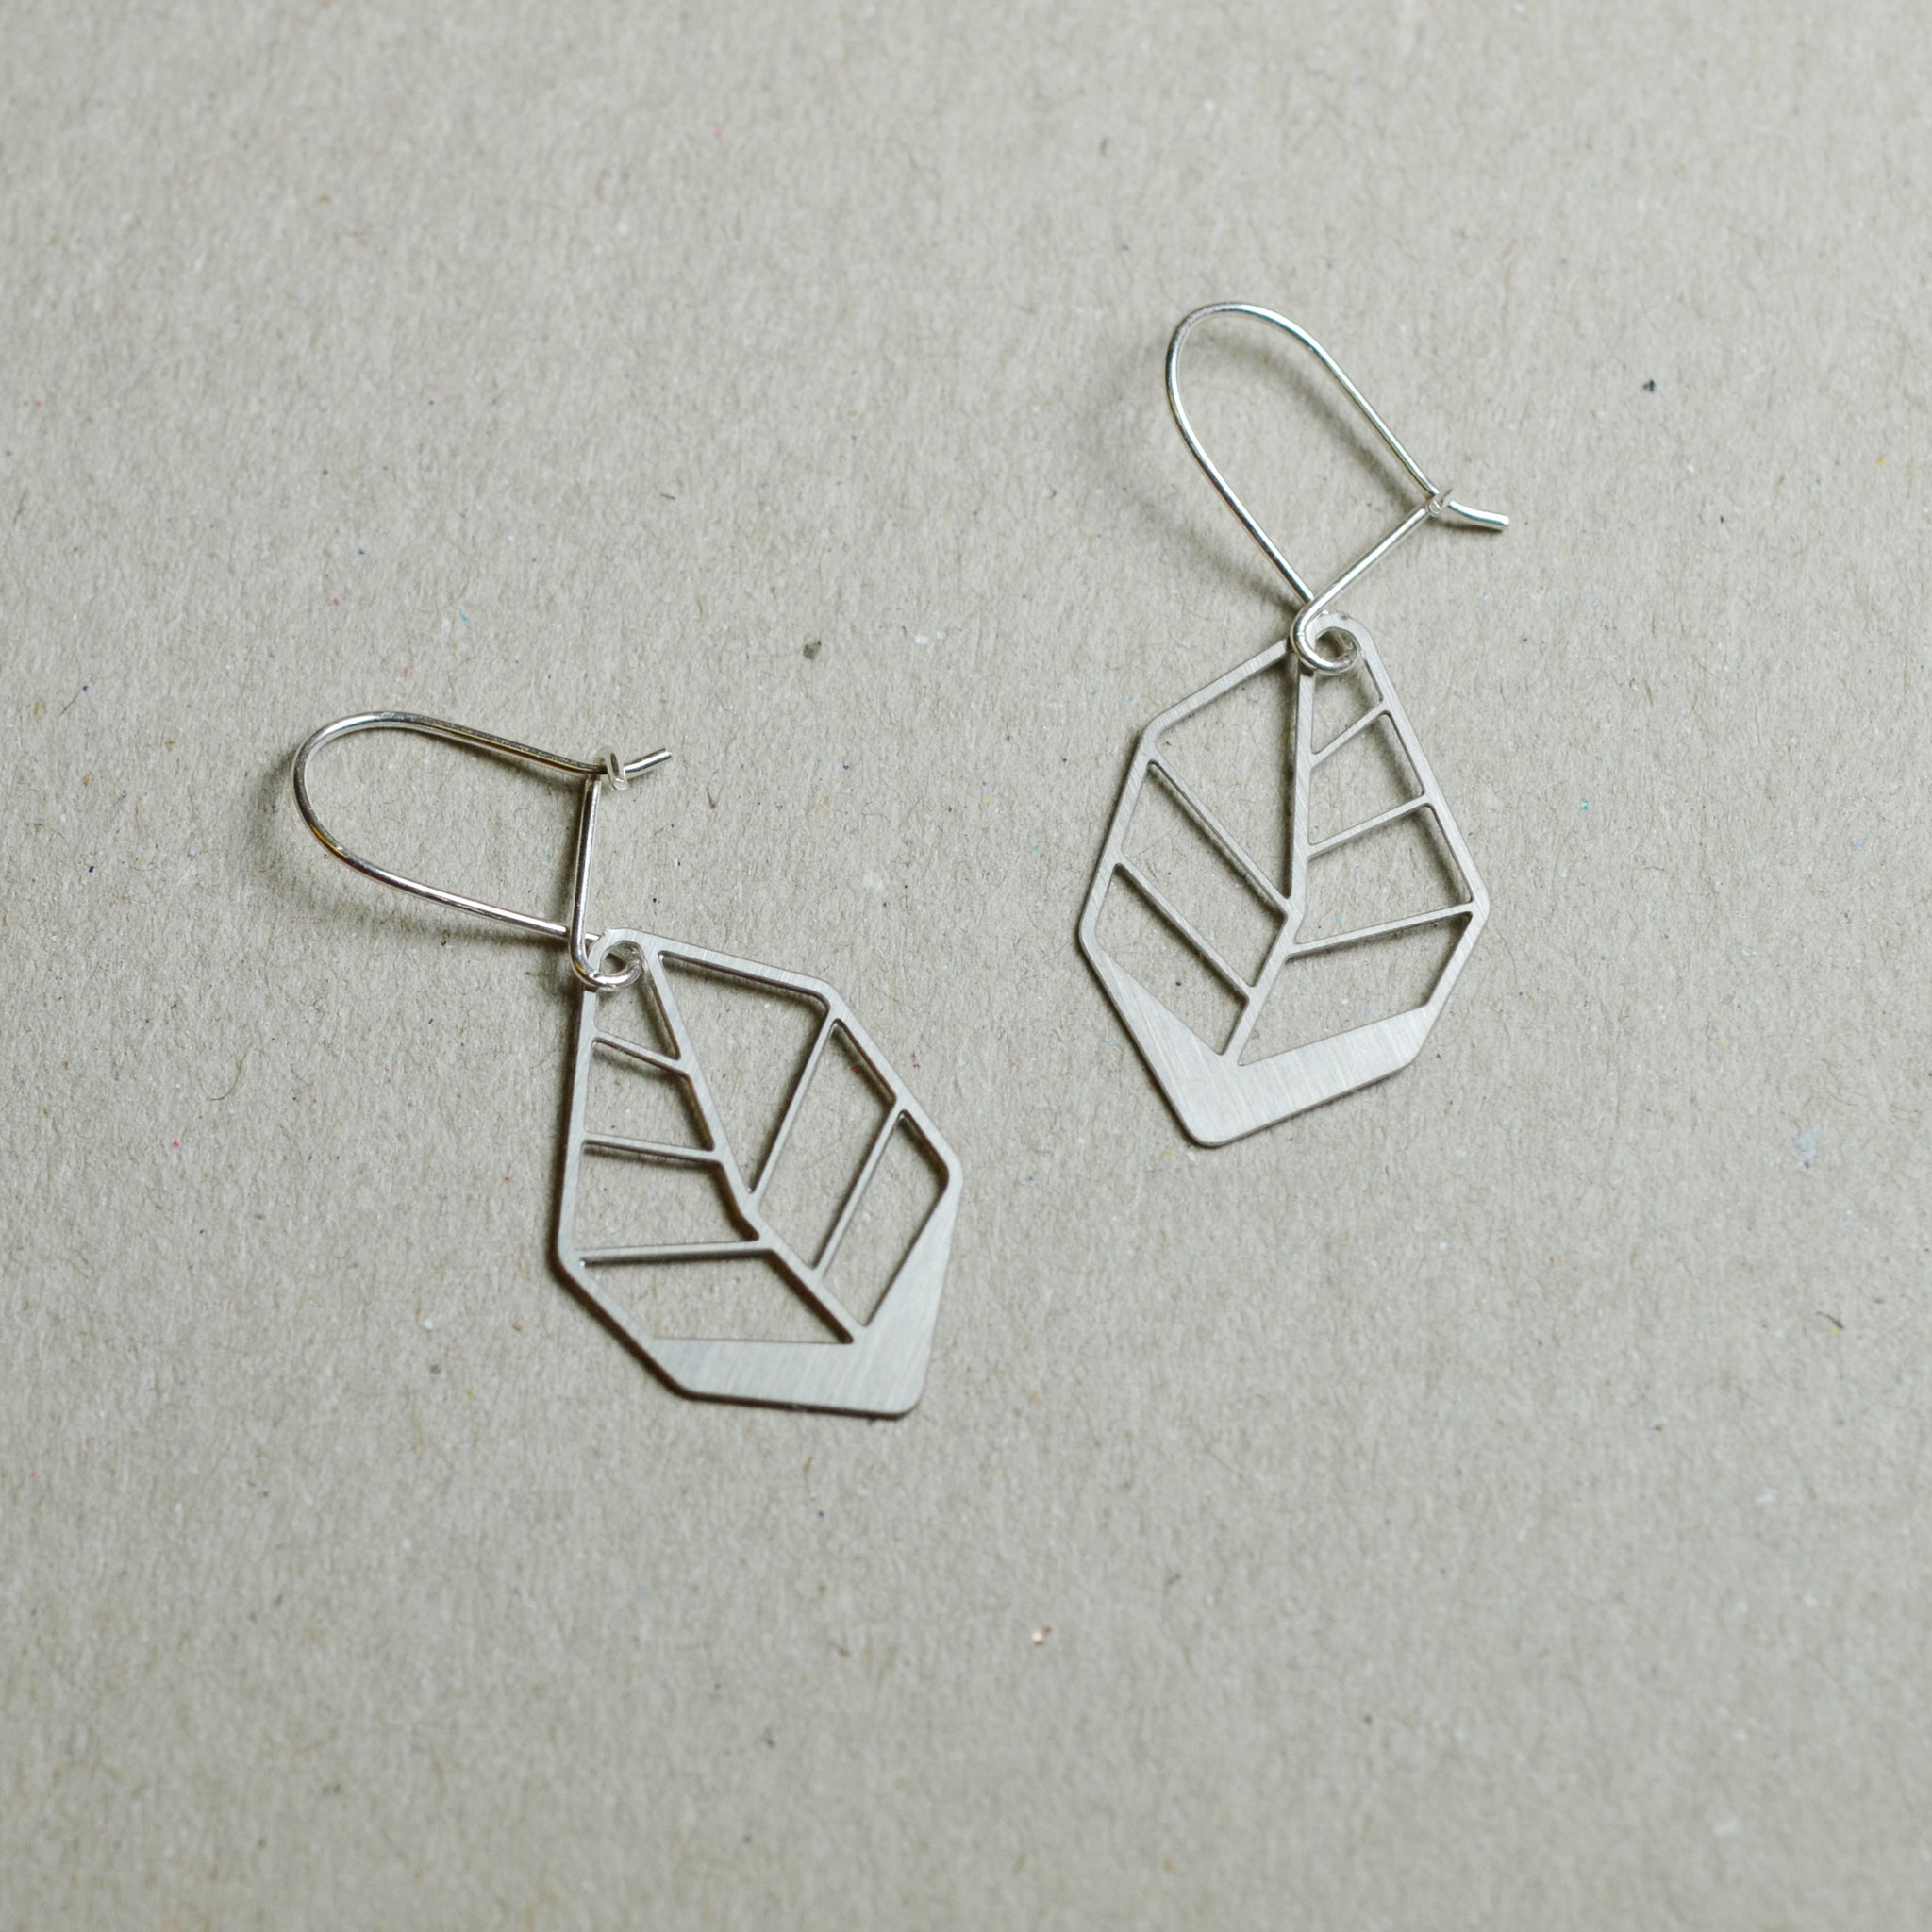 Hoja: Small abstract steel leaf earrings